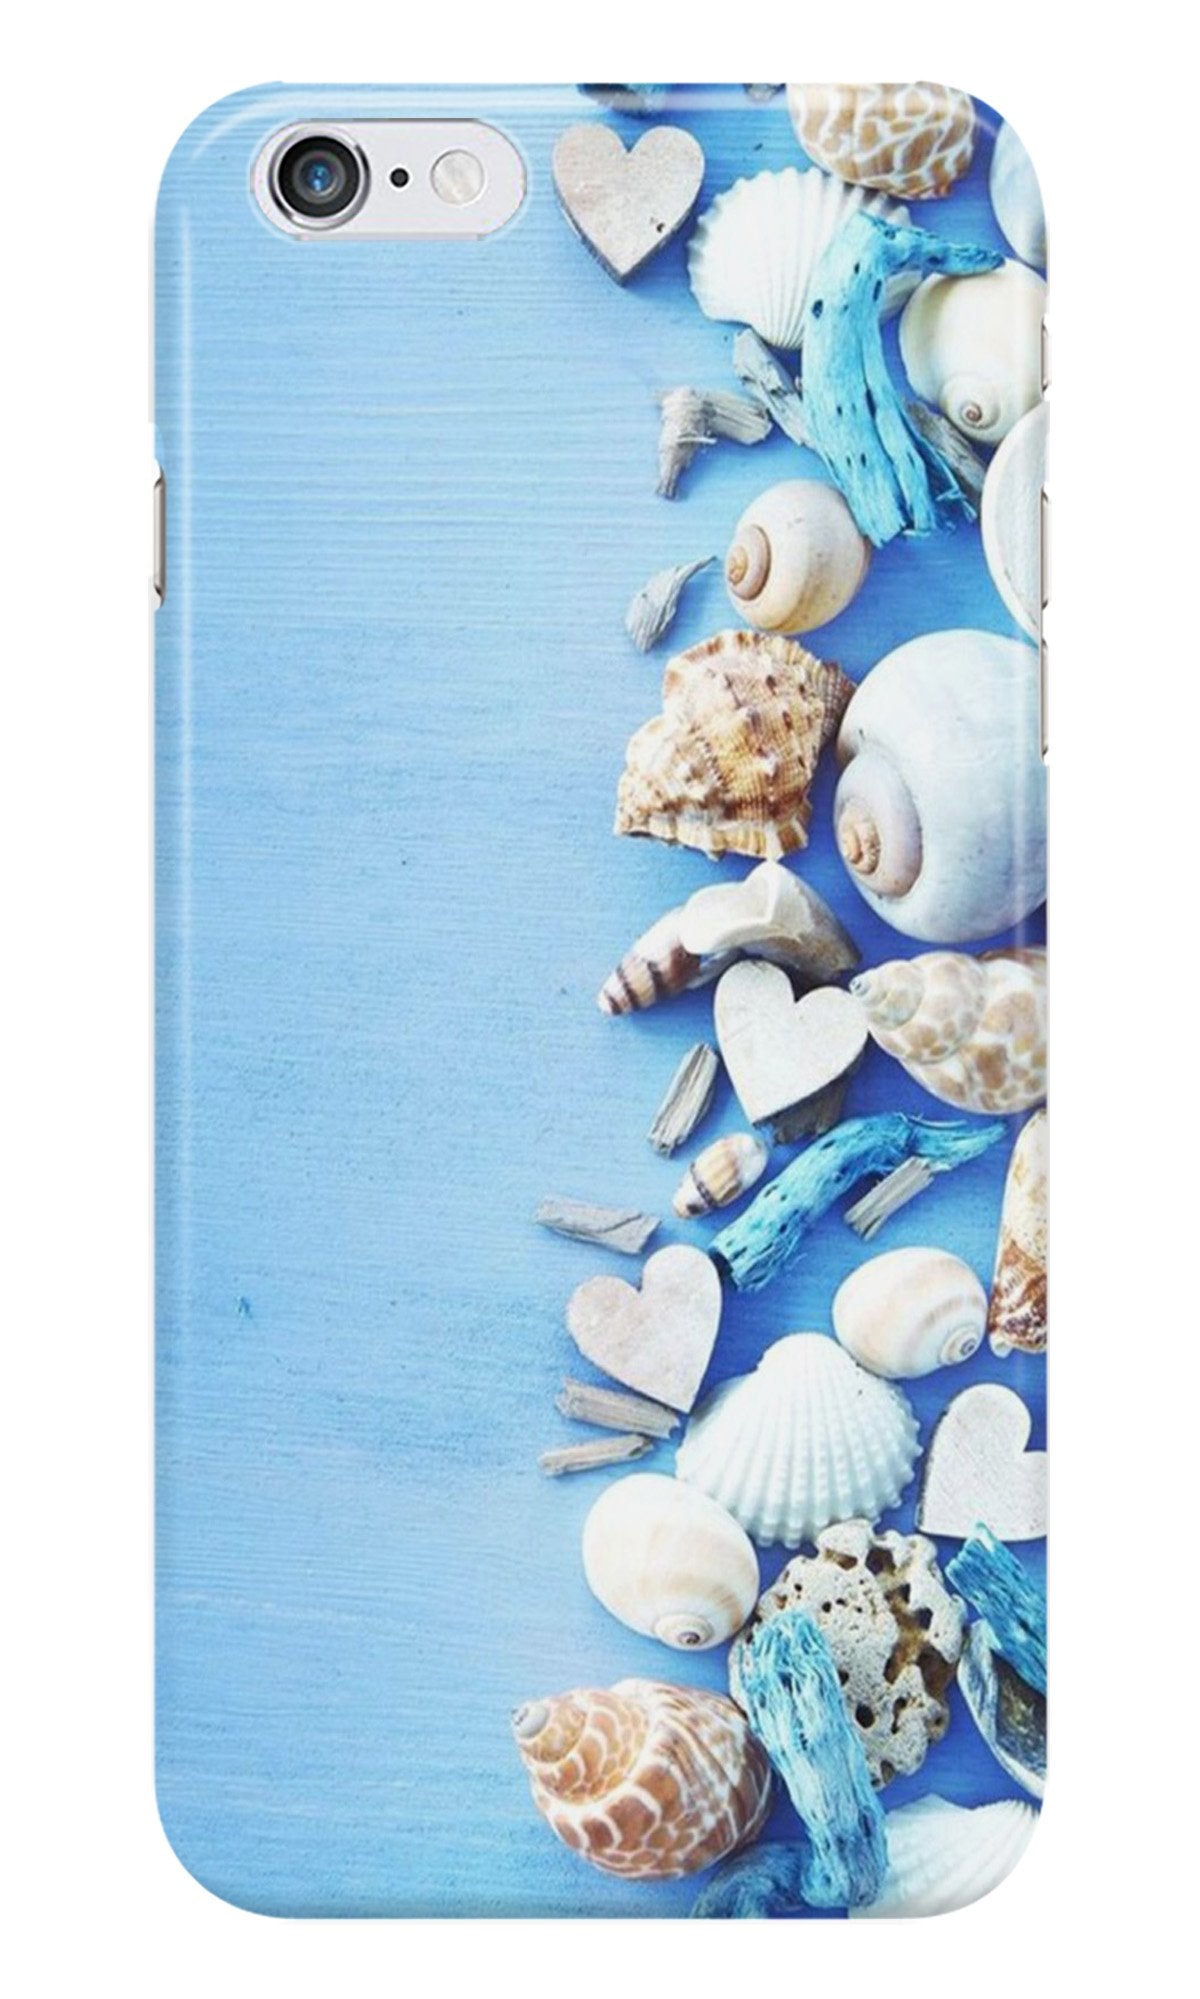 Sea Shells2 Case for iPhone 6 Plus/ 6s Plus